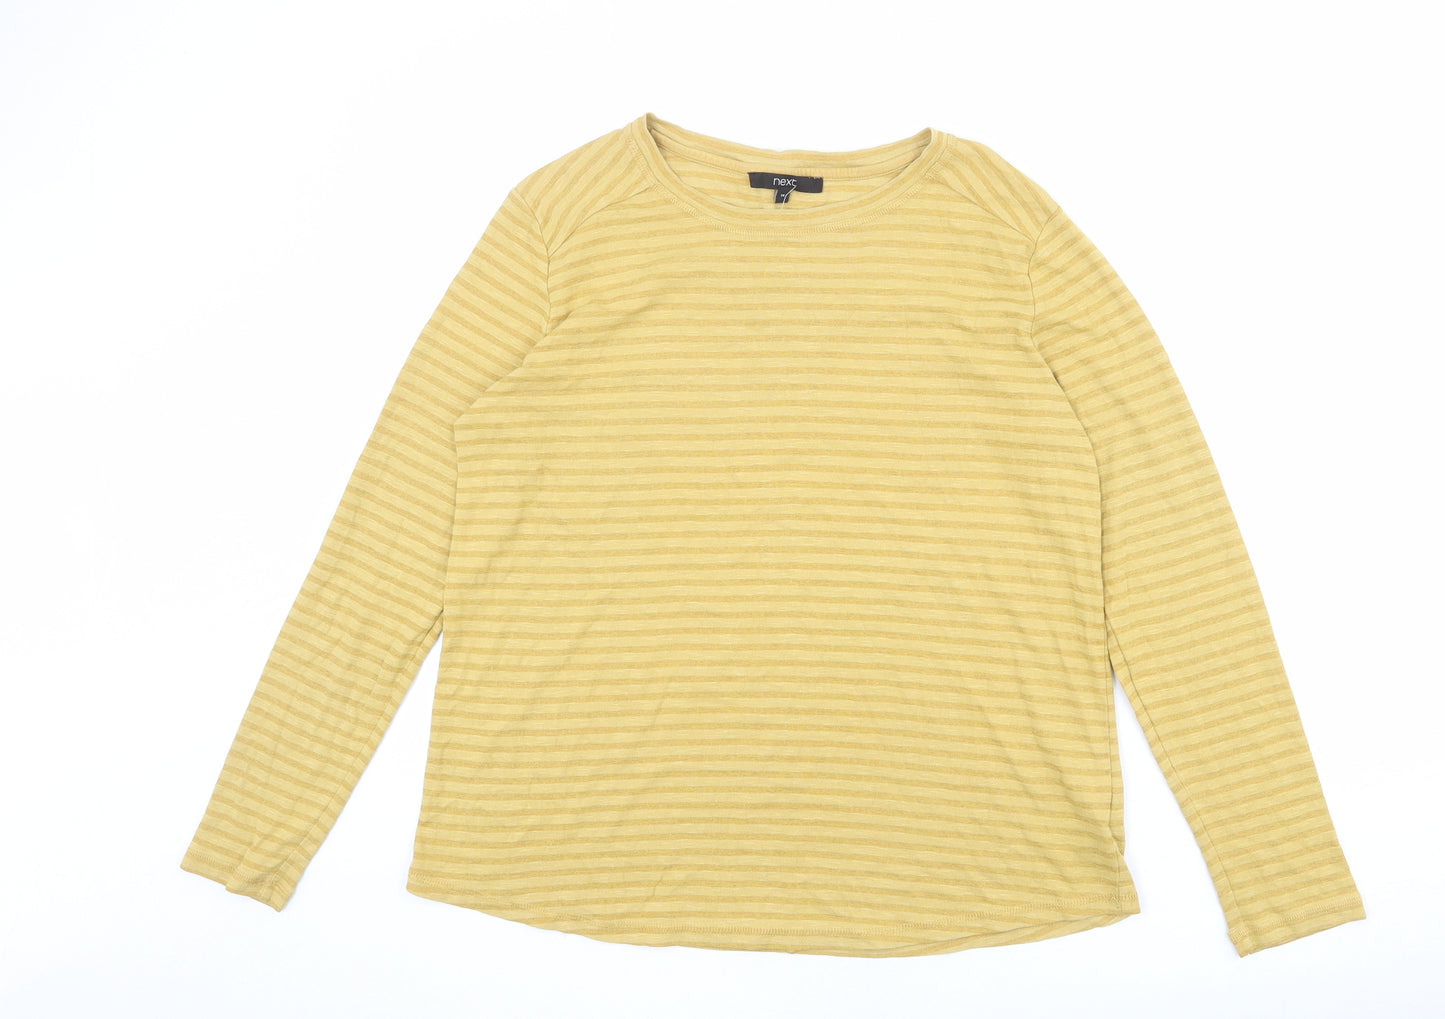 NEXT Womens Yellow Striped Cotton Basic T-Shirt Size 14 Round Neck